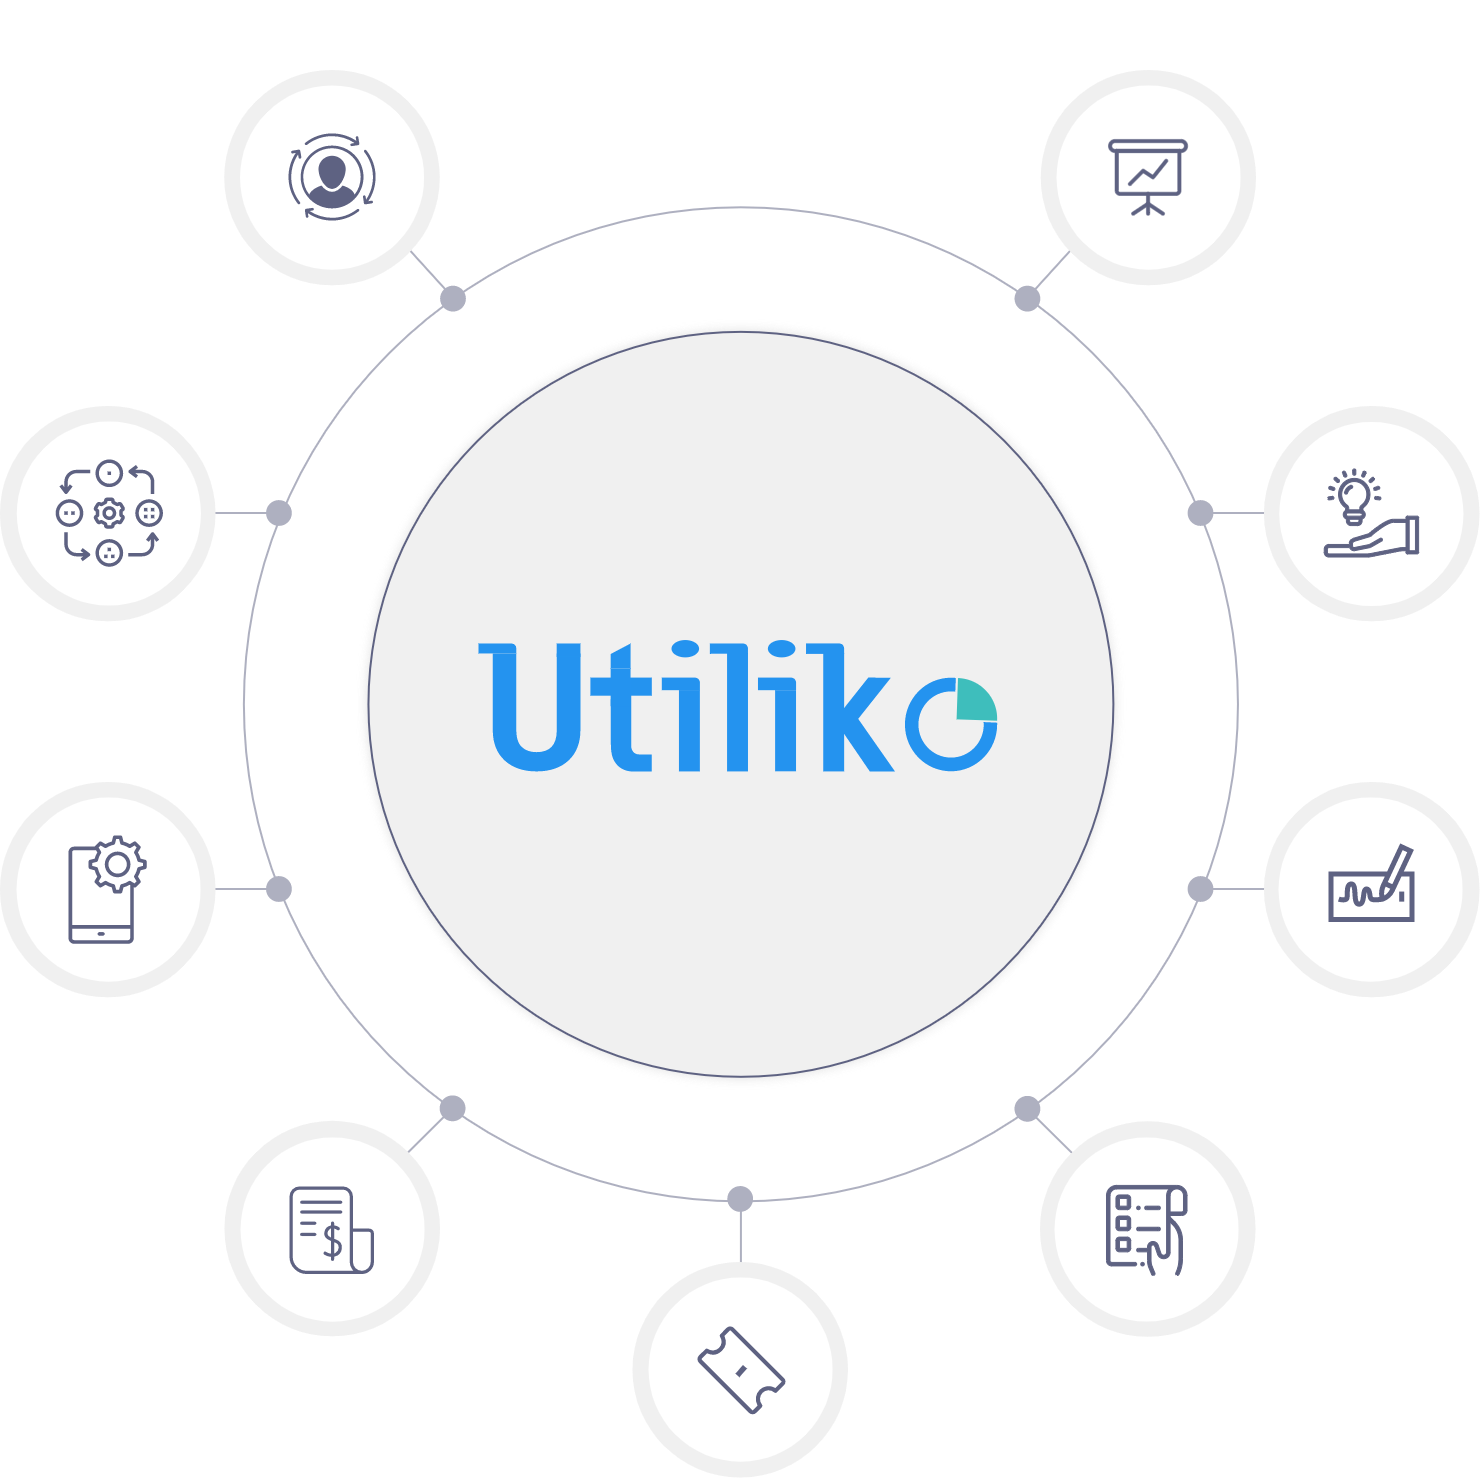 Utiliko - About the platform